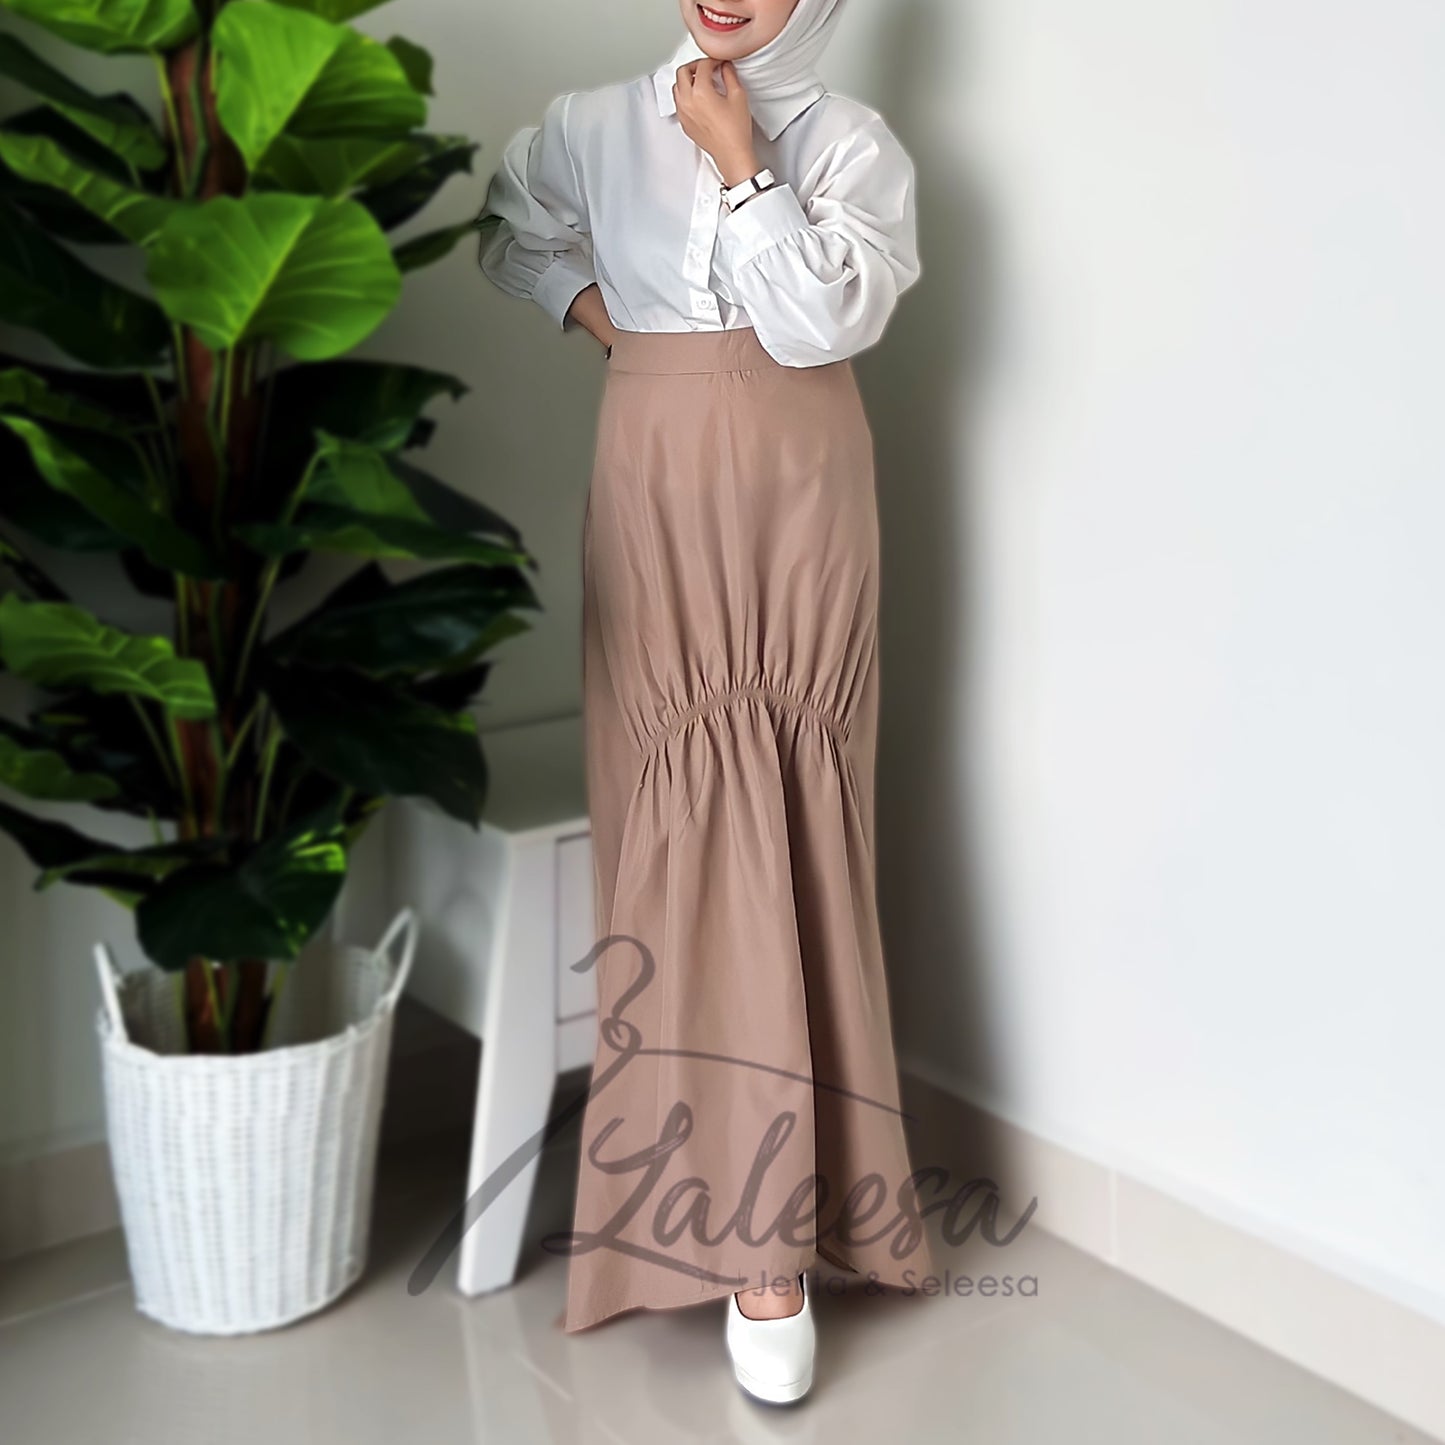 LALEESA PS662662 SKIRT BAHIYA Cotton High Elastic Waist Flowy A Line Long Skirt Muslimah Skirt Labuh Skirt Pencil